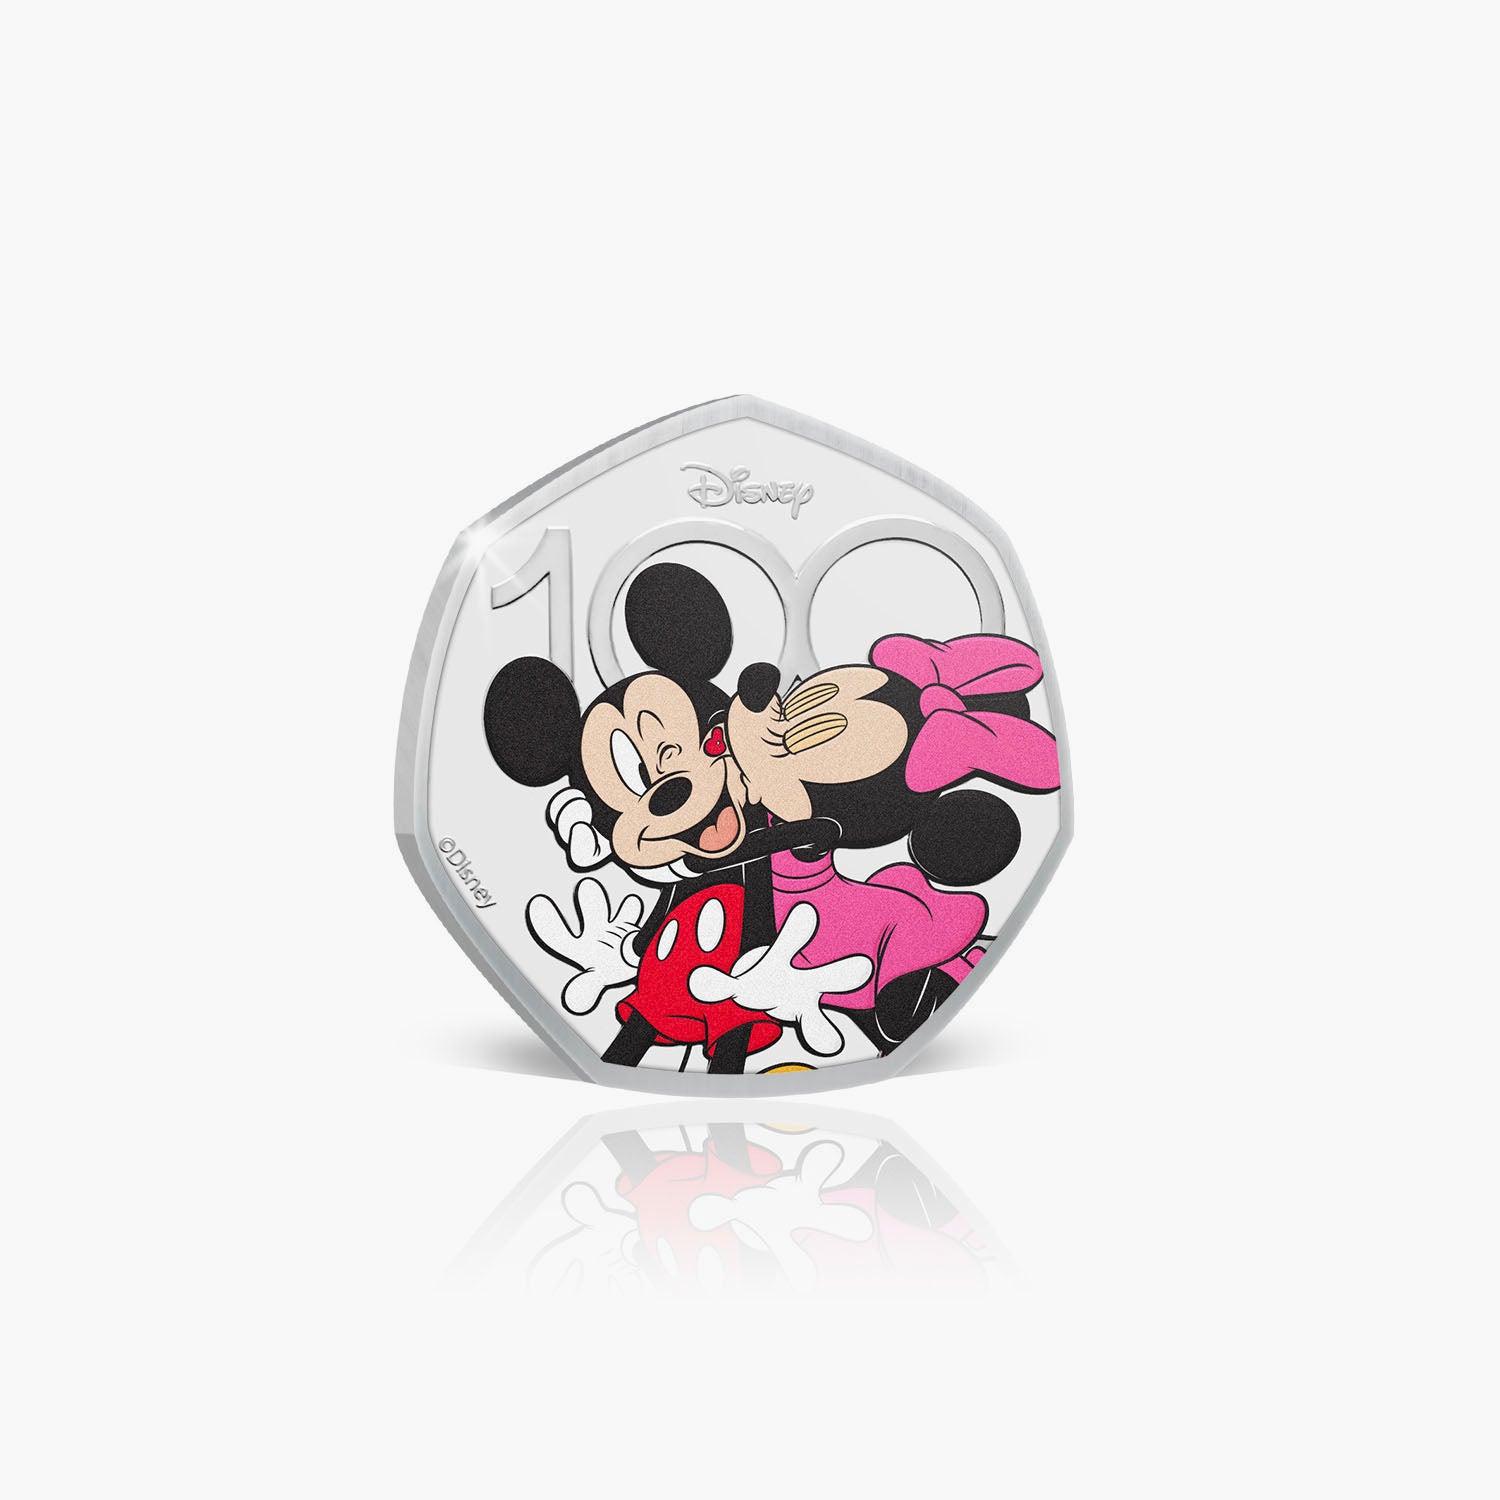 Disney 100th Anniversary Mickey &amp; Minnie 2023 50p BU Color Coin